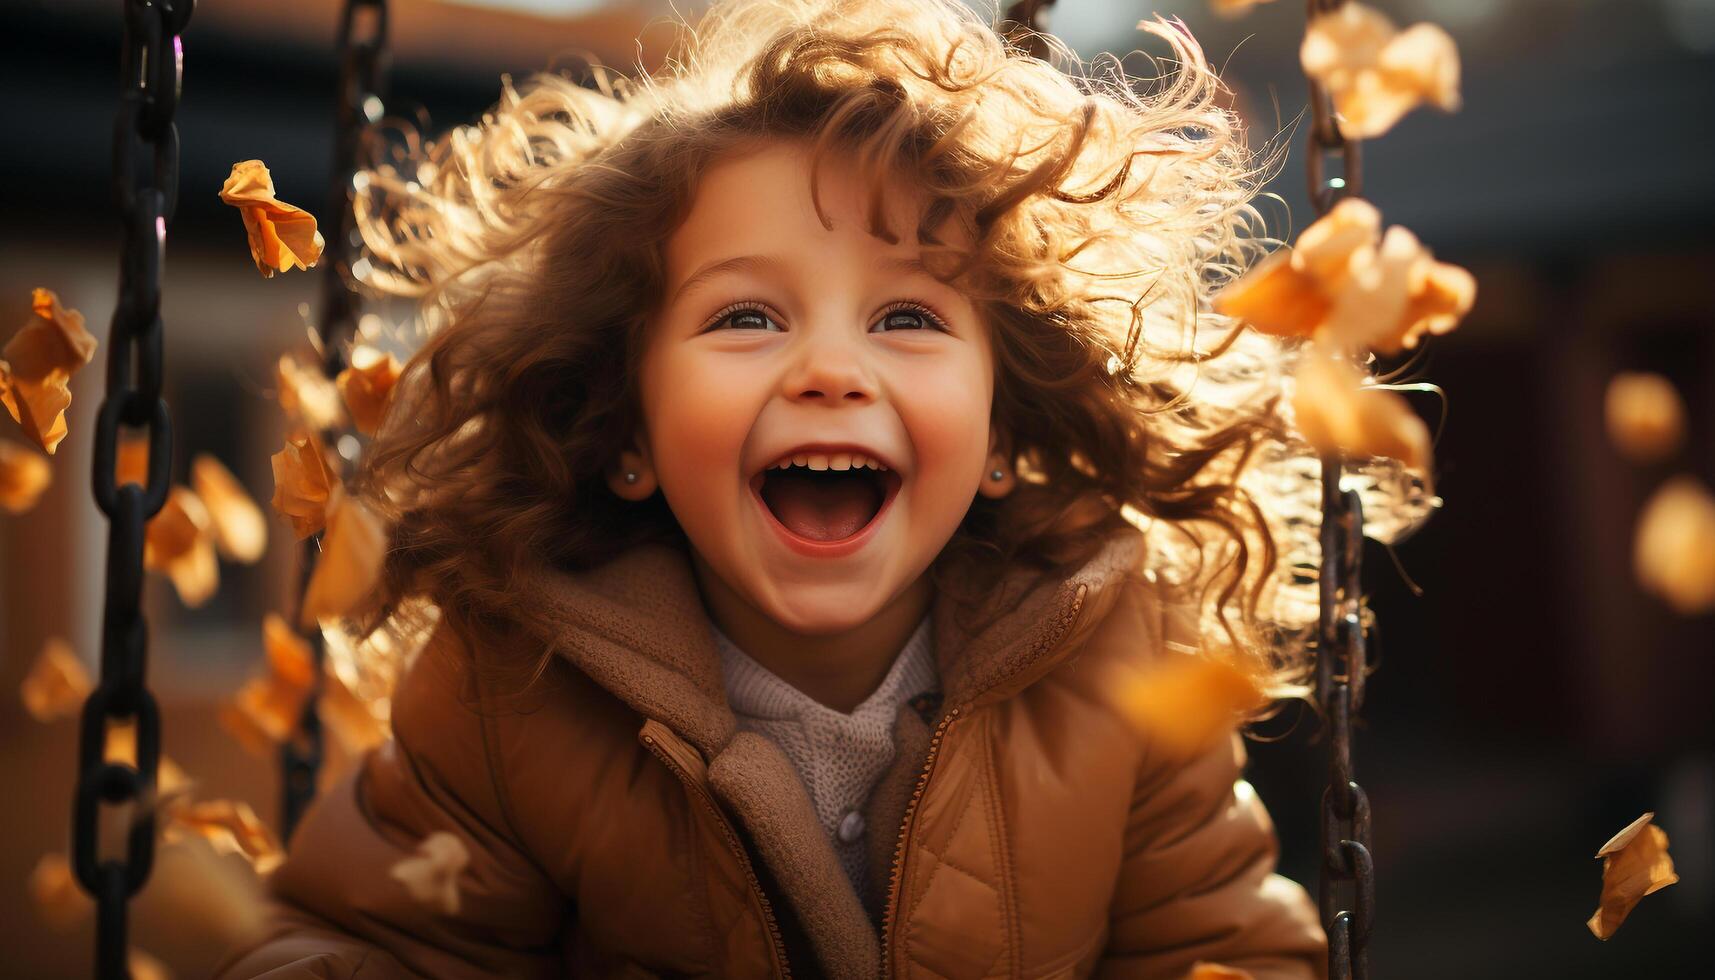 AI generated A cheerful child playing outdoors, enjoying winter joyful celebration generated by AI photo